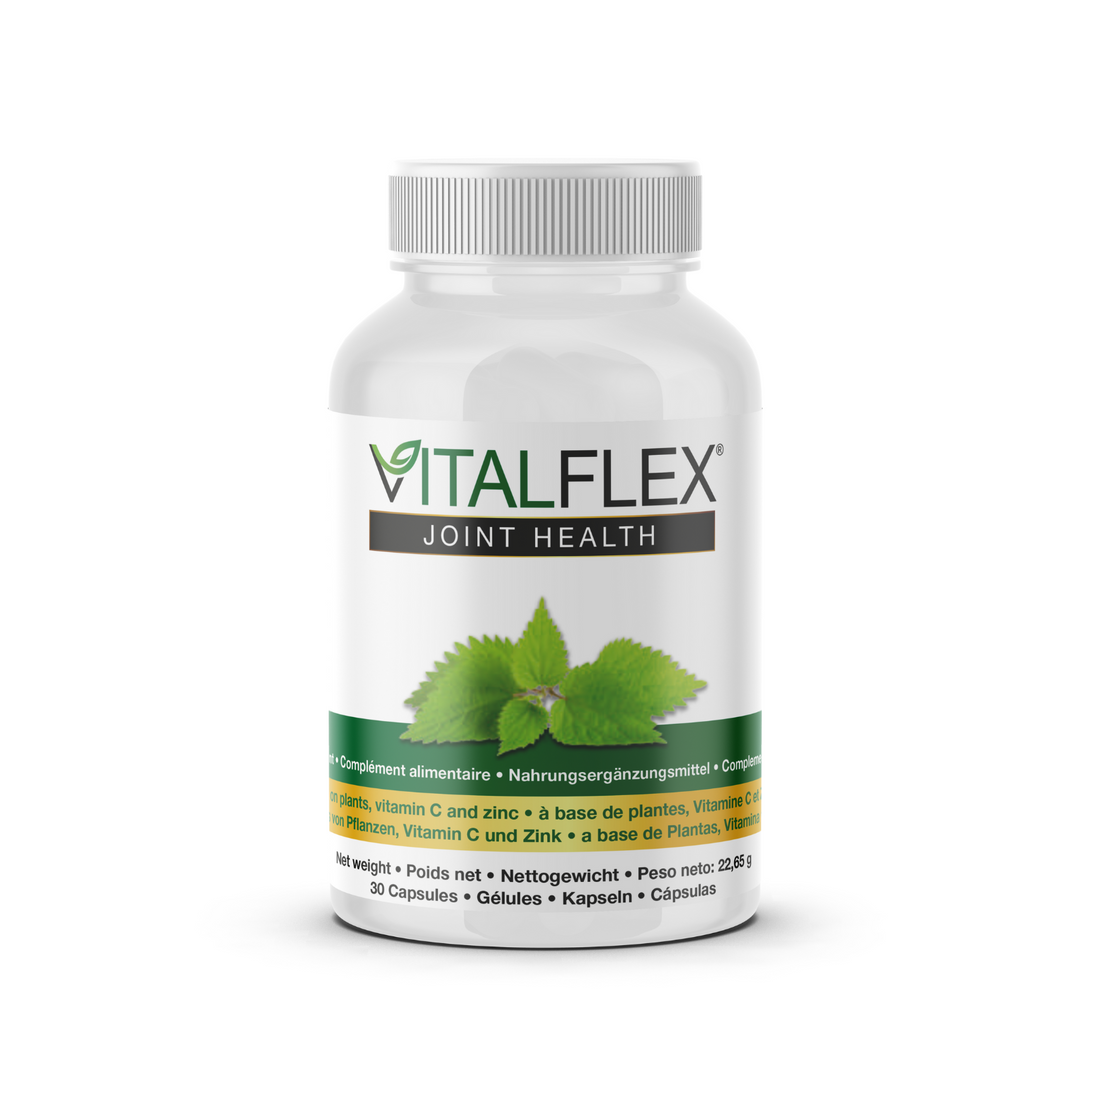 VITALFLEX™ - Health for joint pain